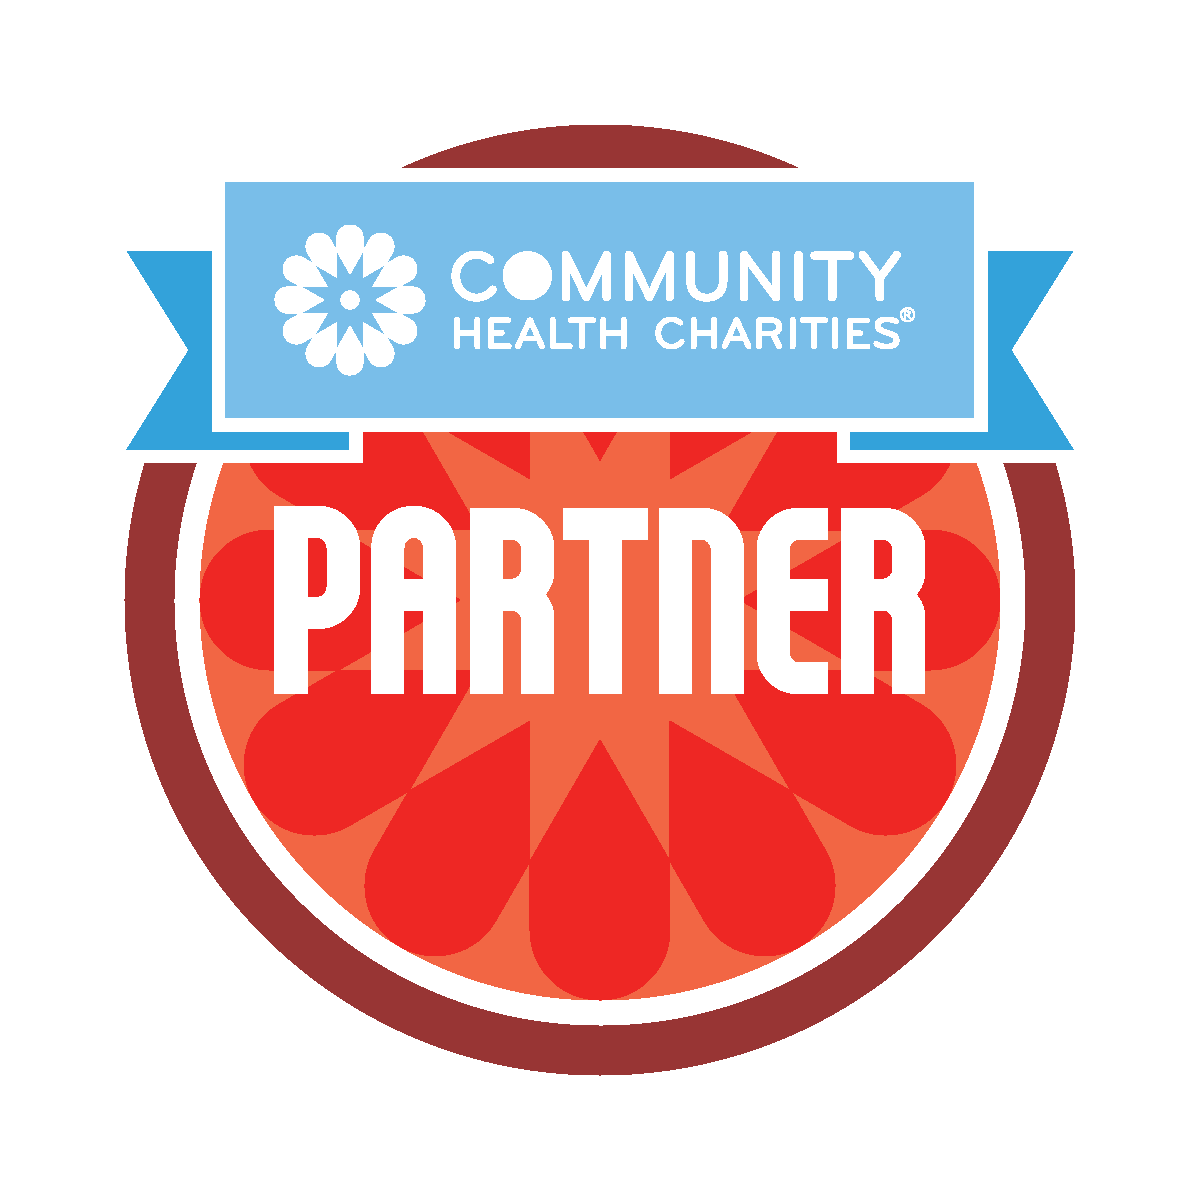 Community Partner